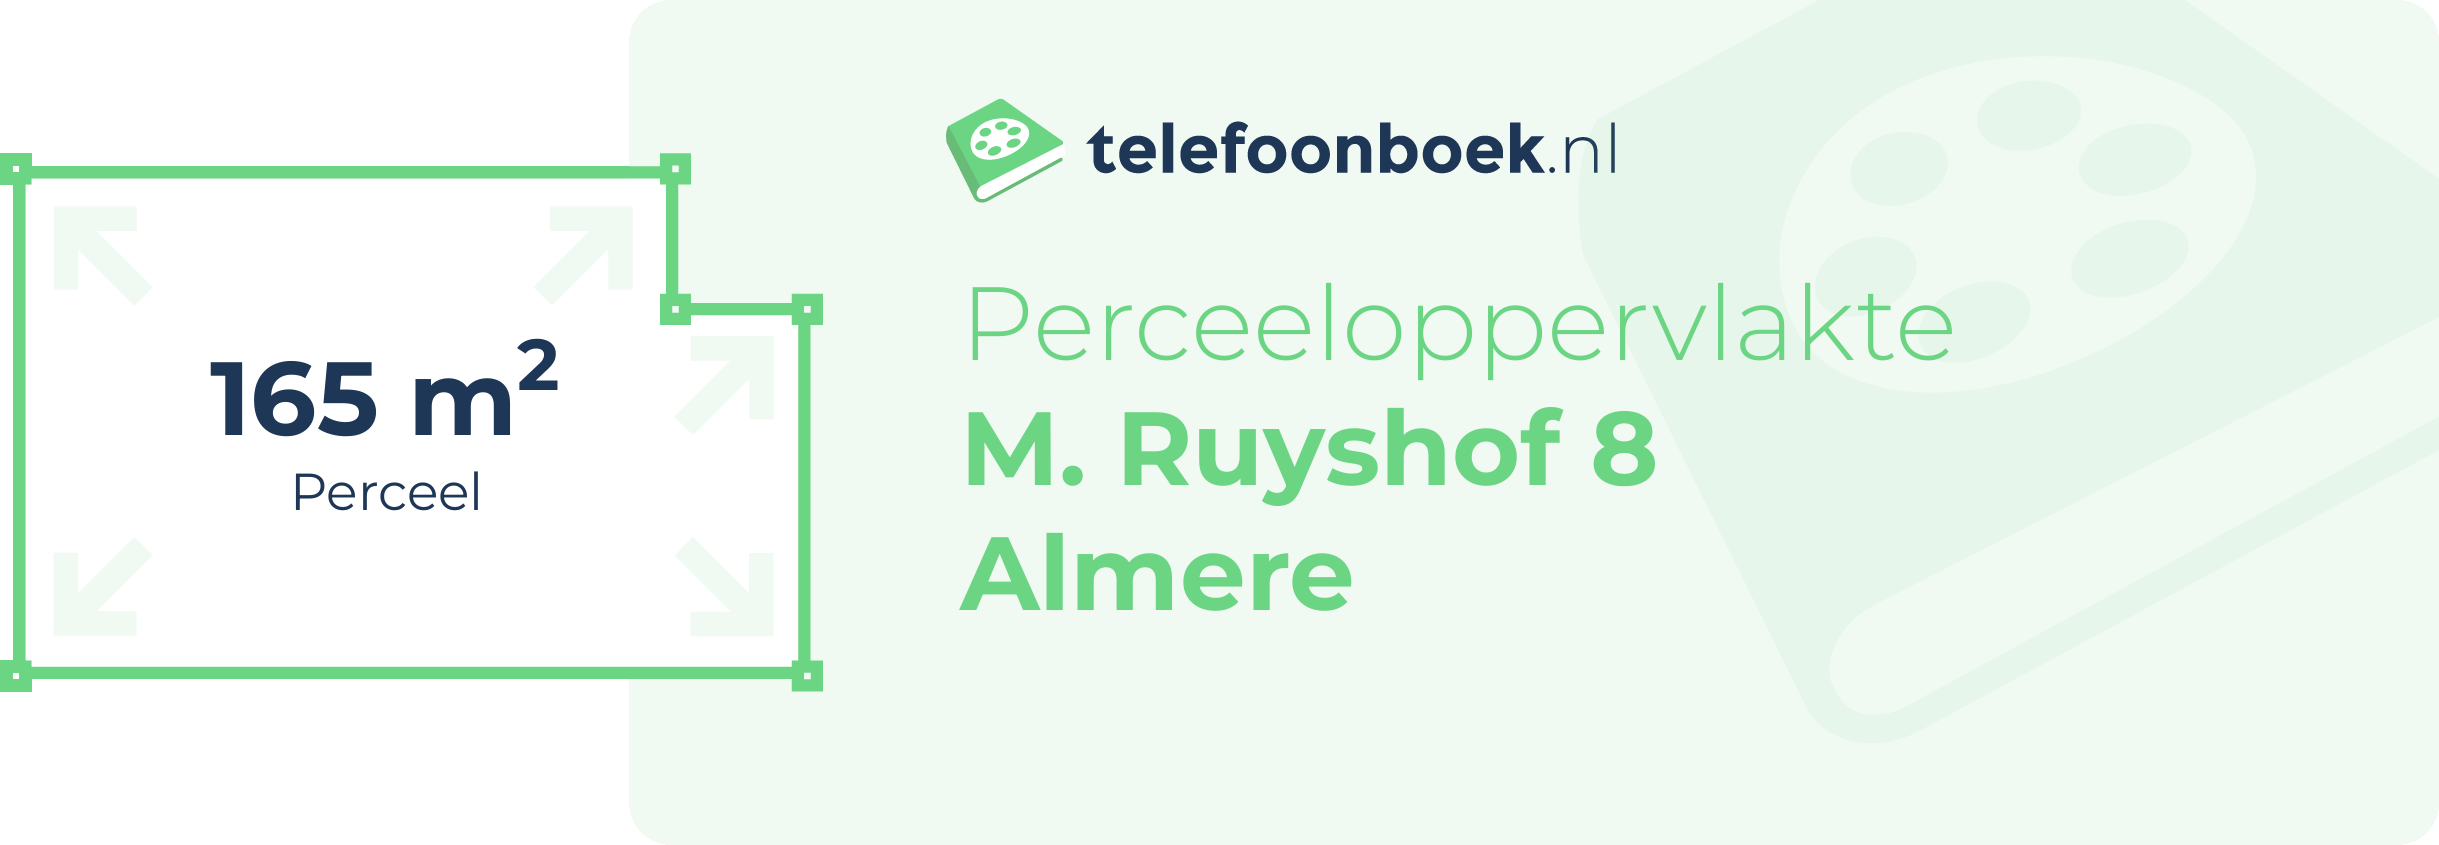 Perceeloppervlakte M. Ruyshof 8 Almere